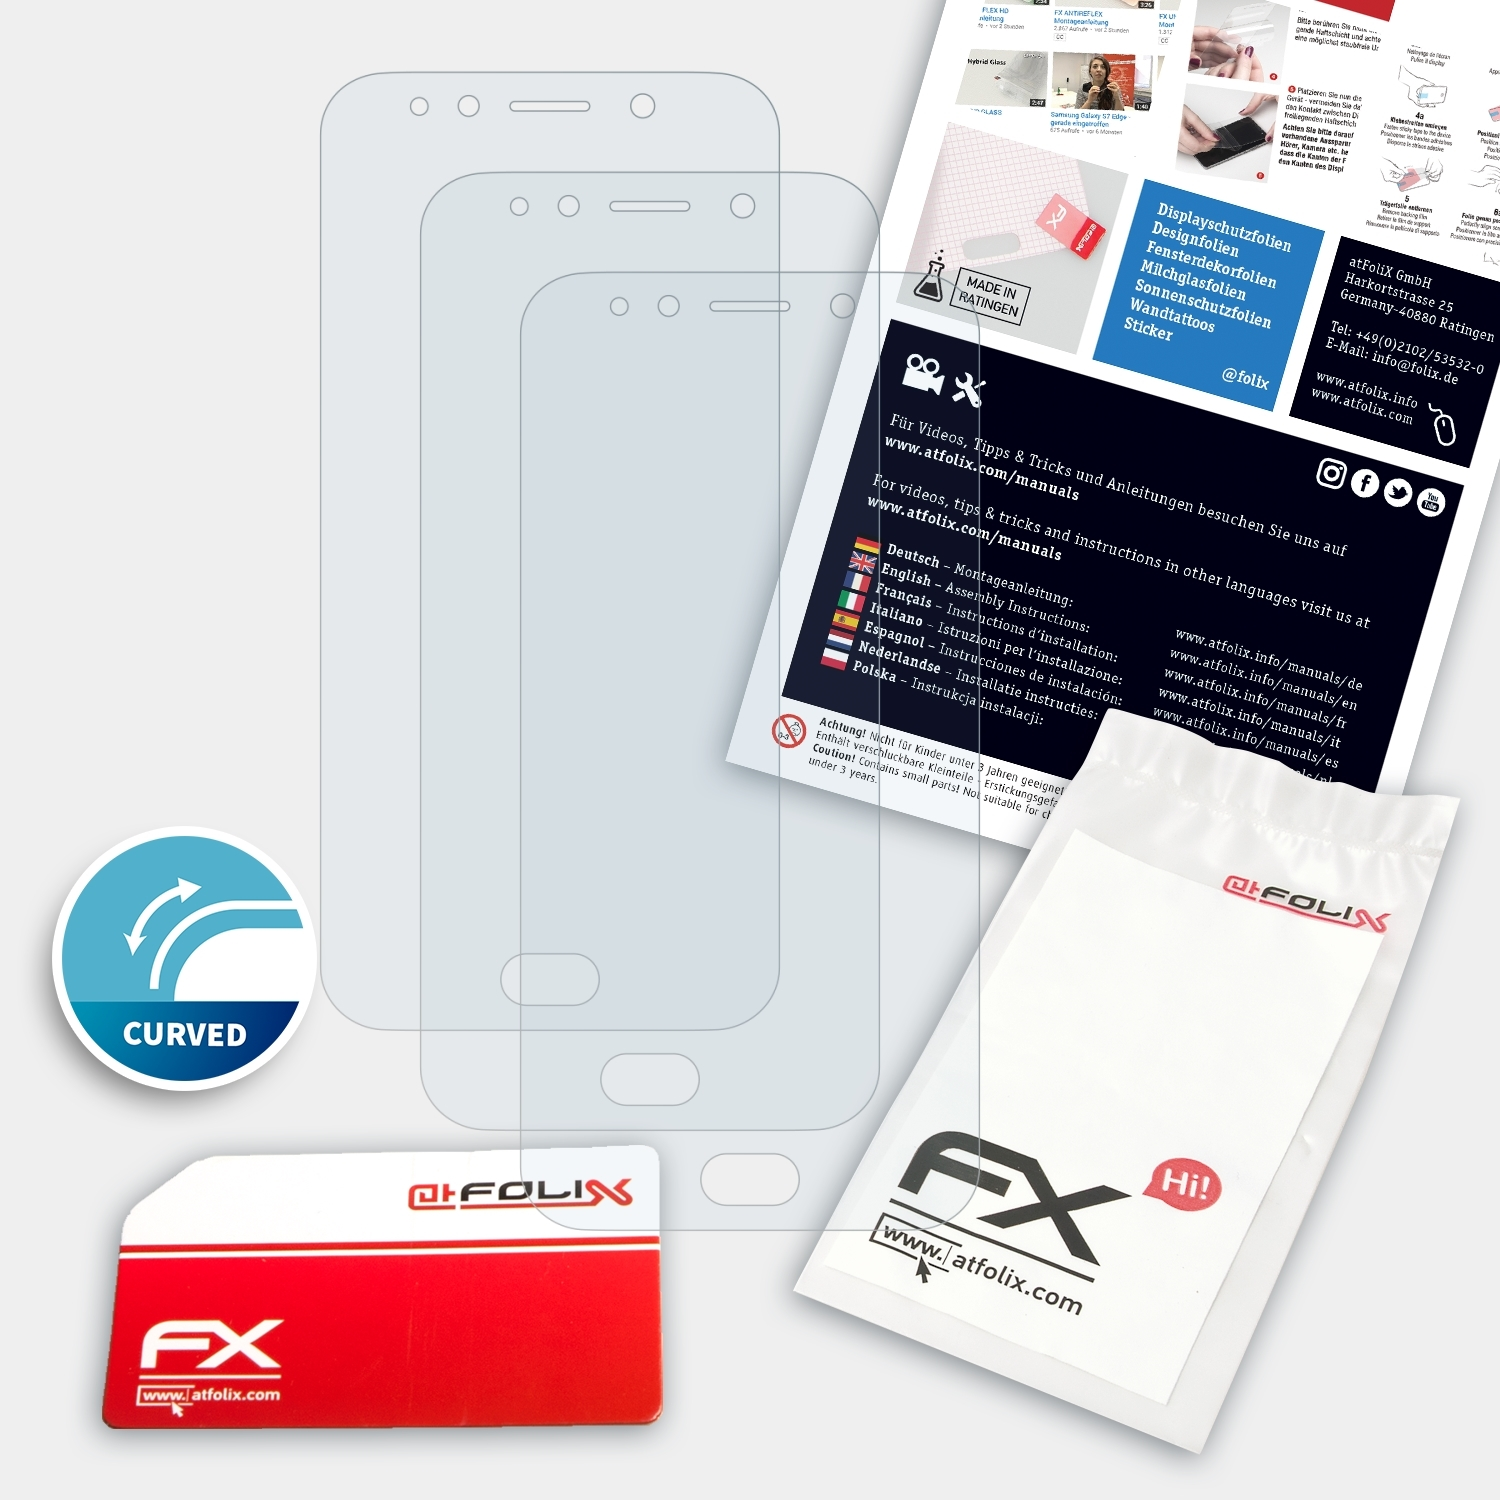 ATFOLIX 3x S) FX-ActiFleX UMiDigi Displayschutz(für